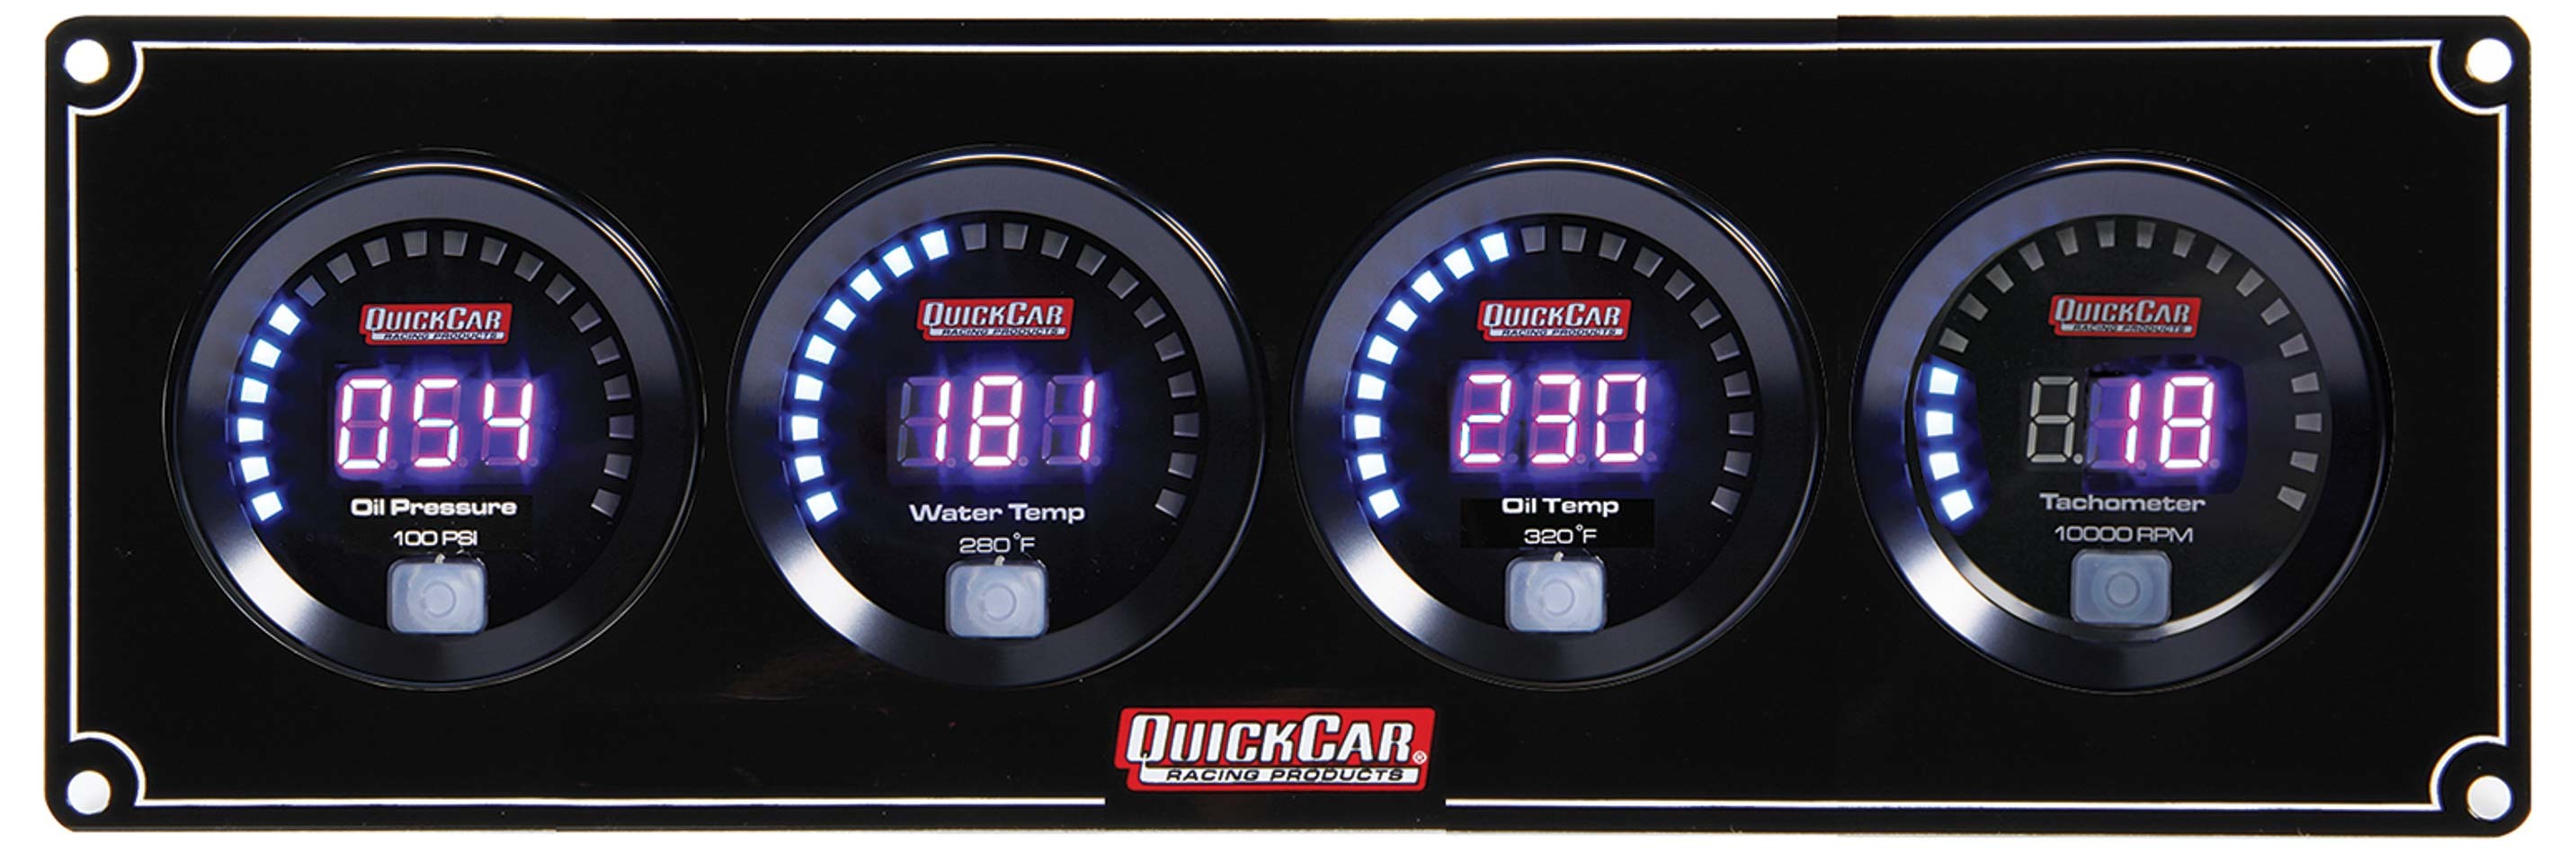 QuickCar 67-3041 Gauge Panel Assembly, Digital, Oil Pressure / Water Temperature / Oil Temperature / Tachometer, Black Face, Kit